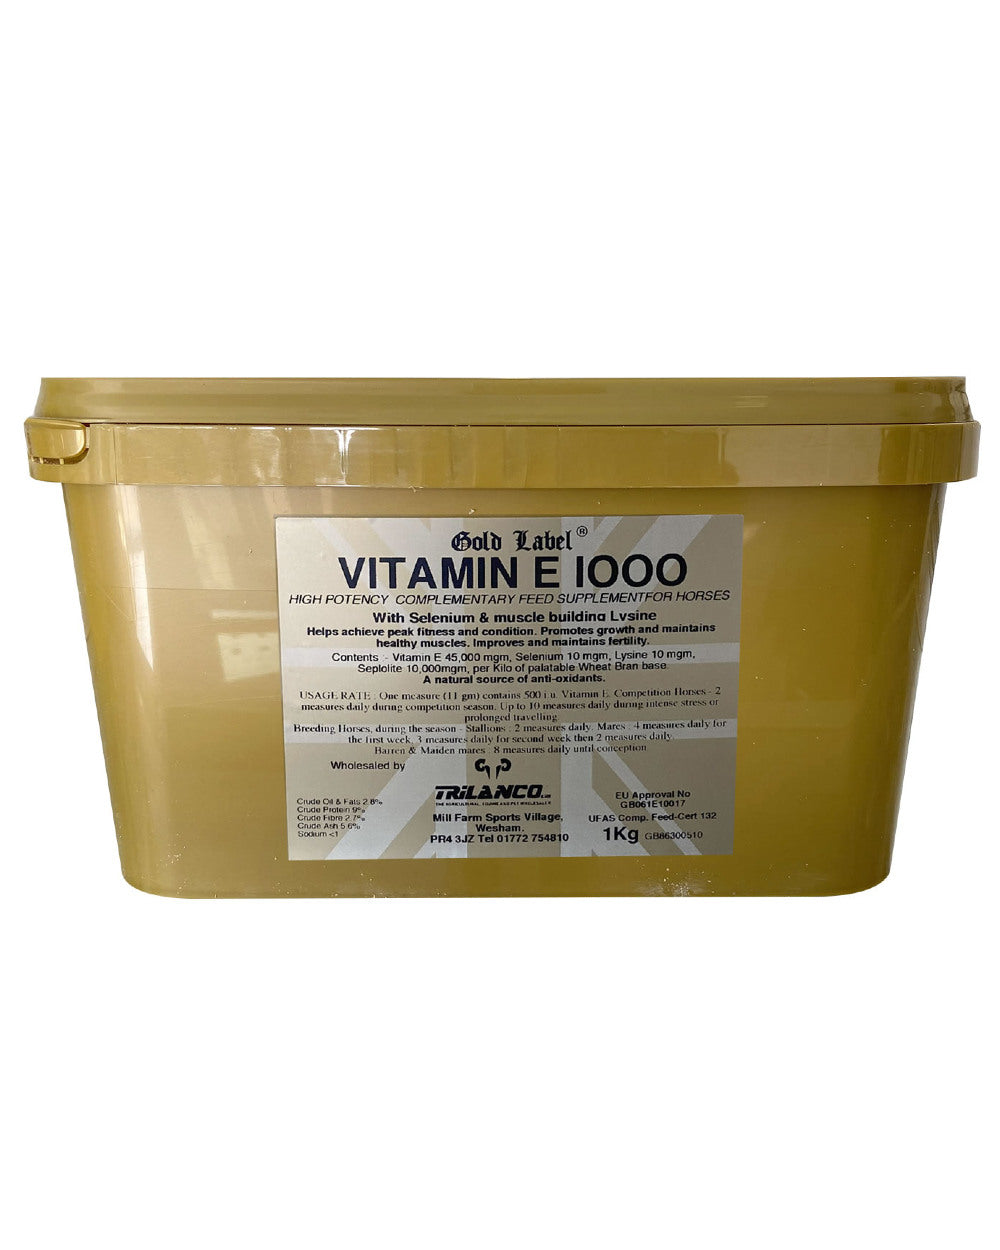 Gold Label Vitamin E 1000 1kg On A White Background